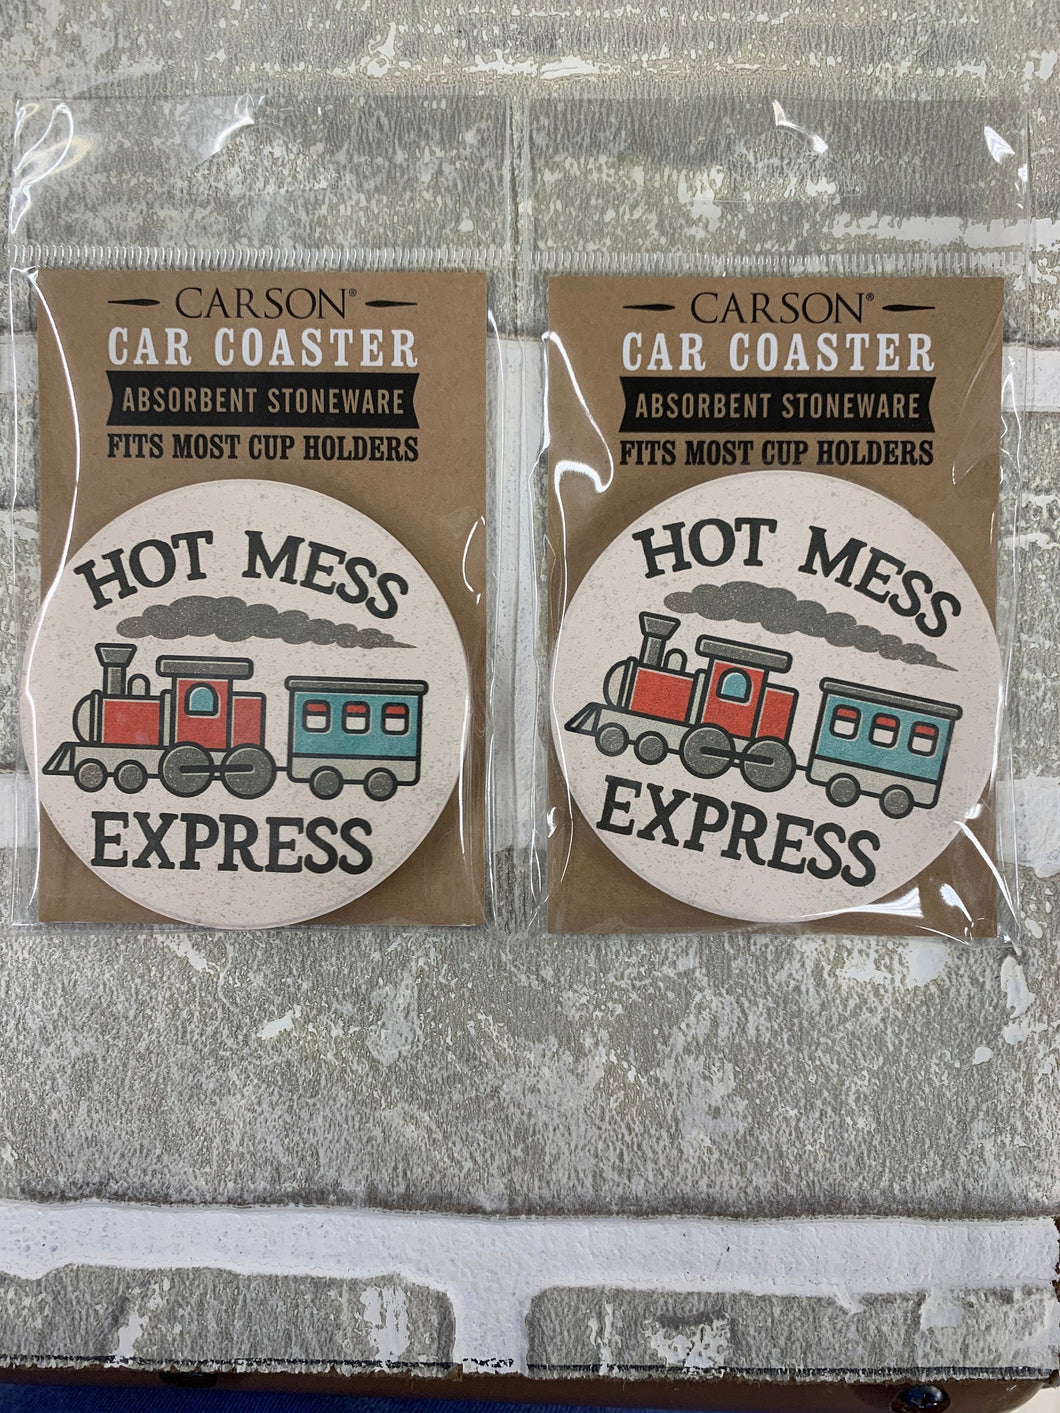 Hot mess express car coasters